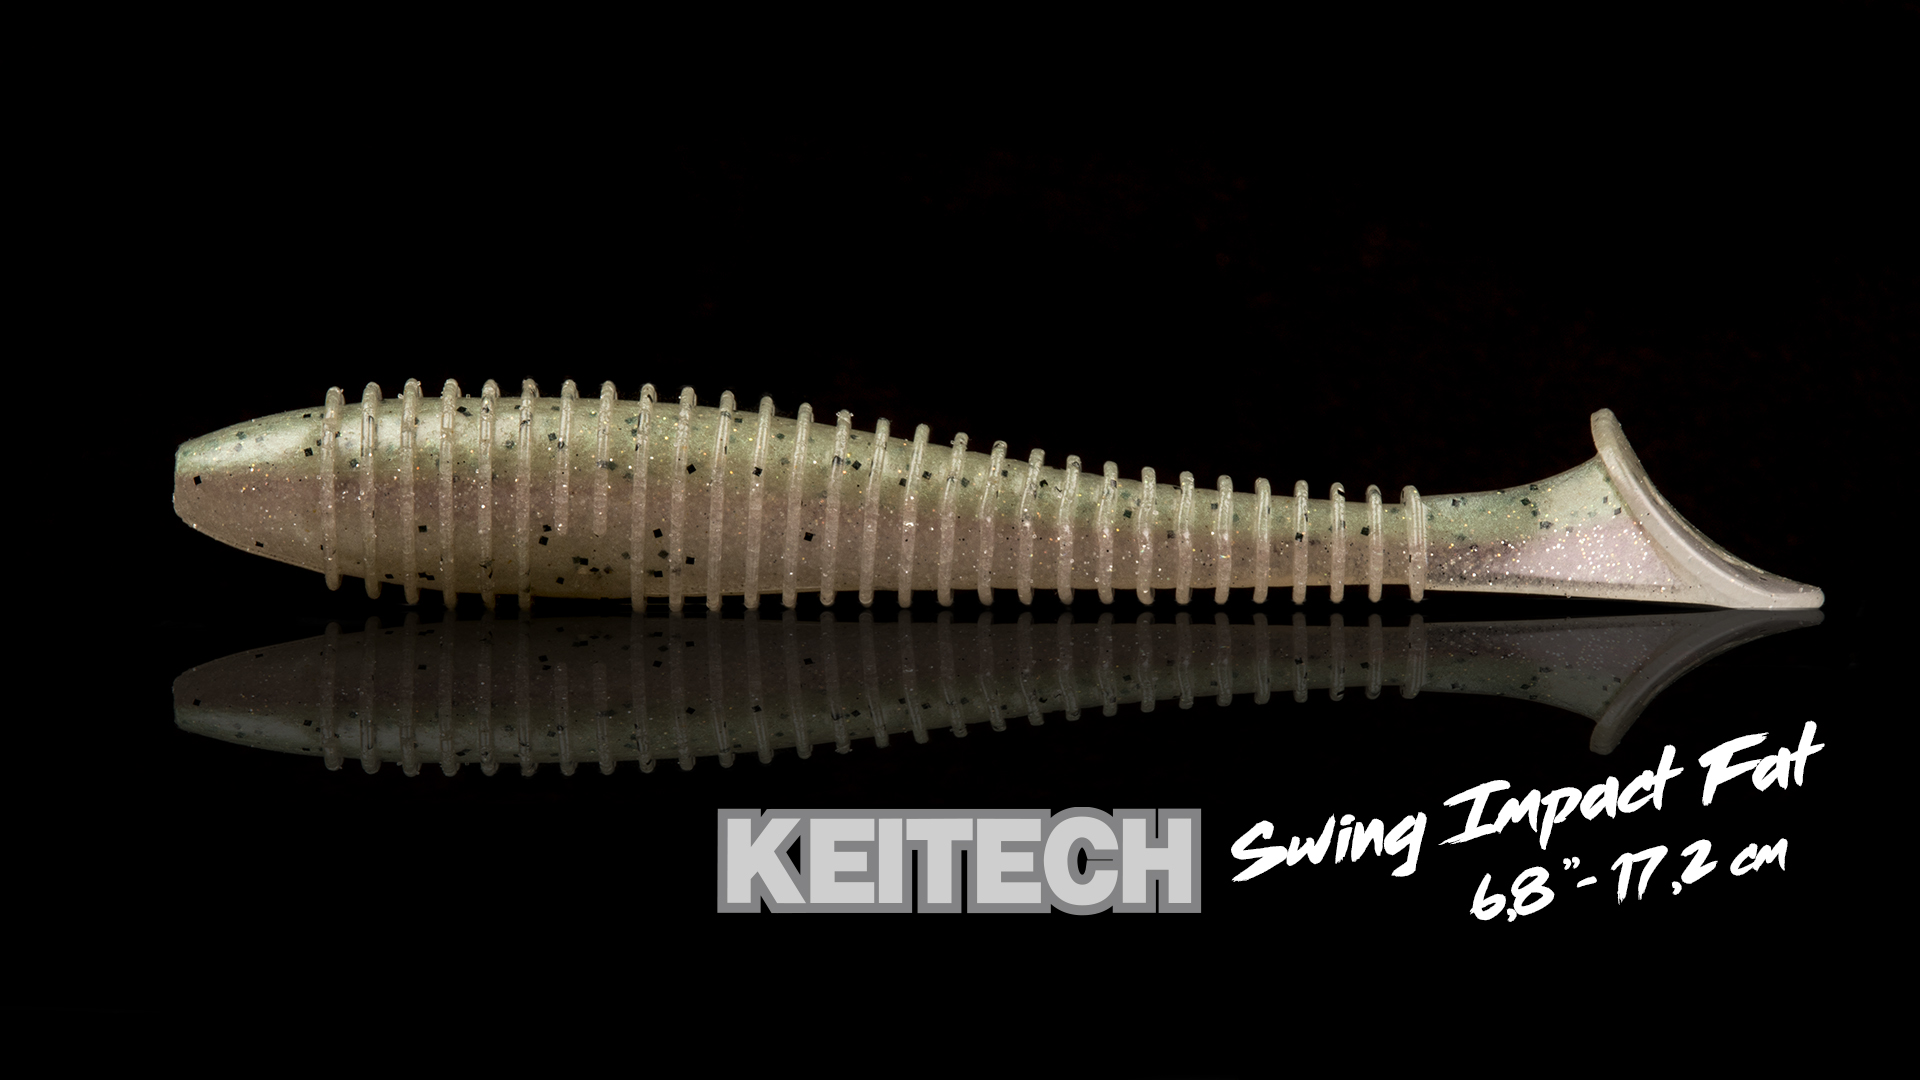 Keitech-Swing-Impact-Fat-6.8-Détail-1